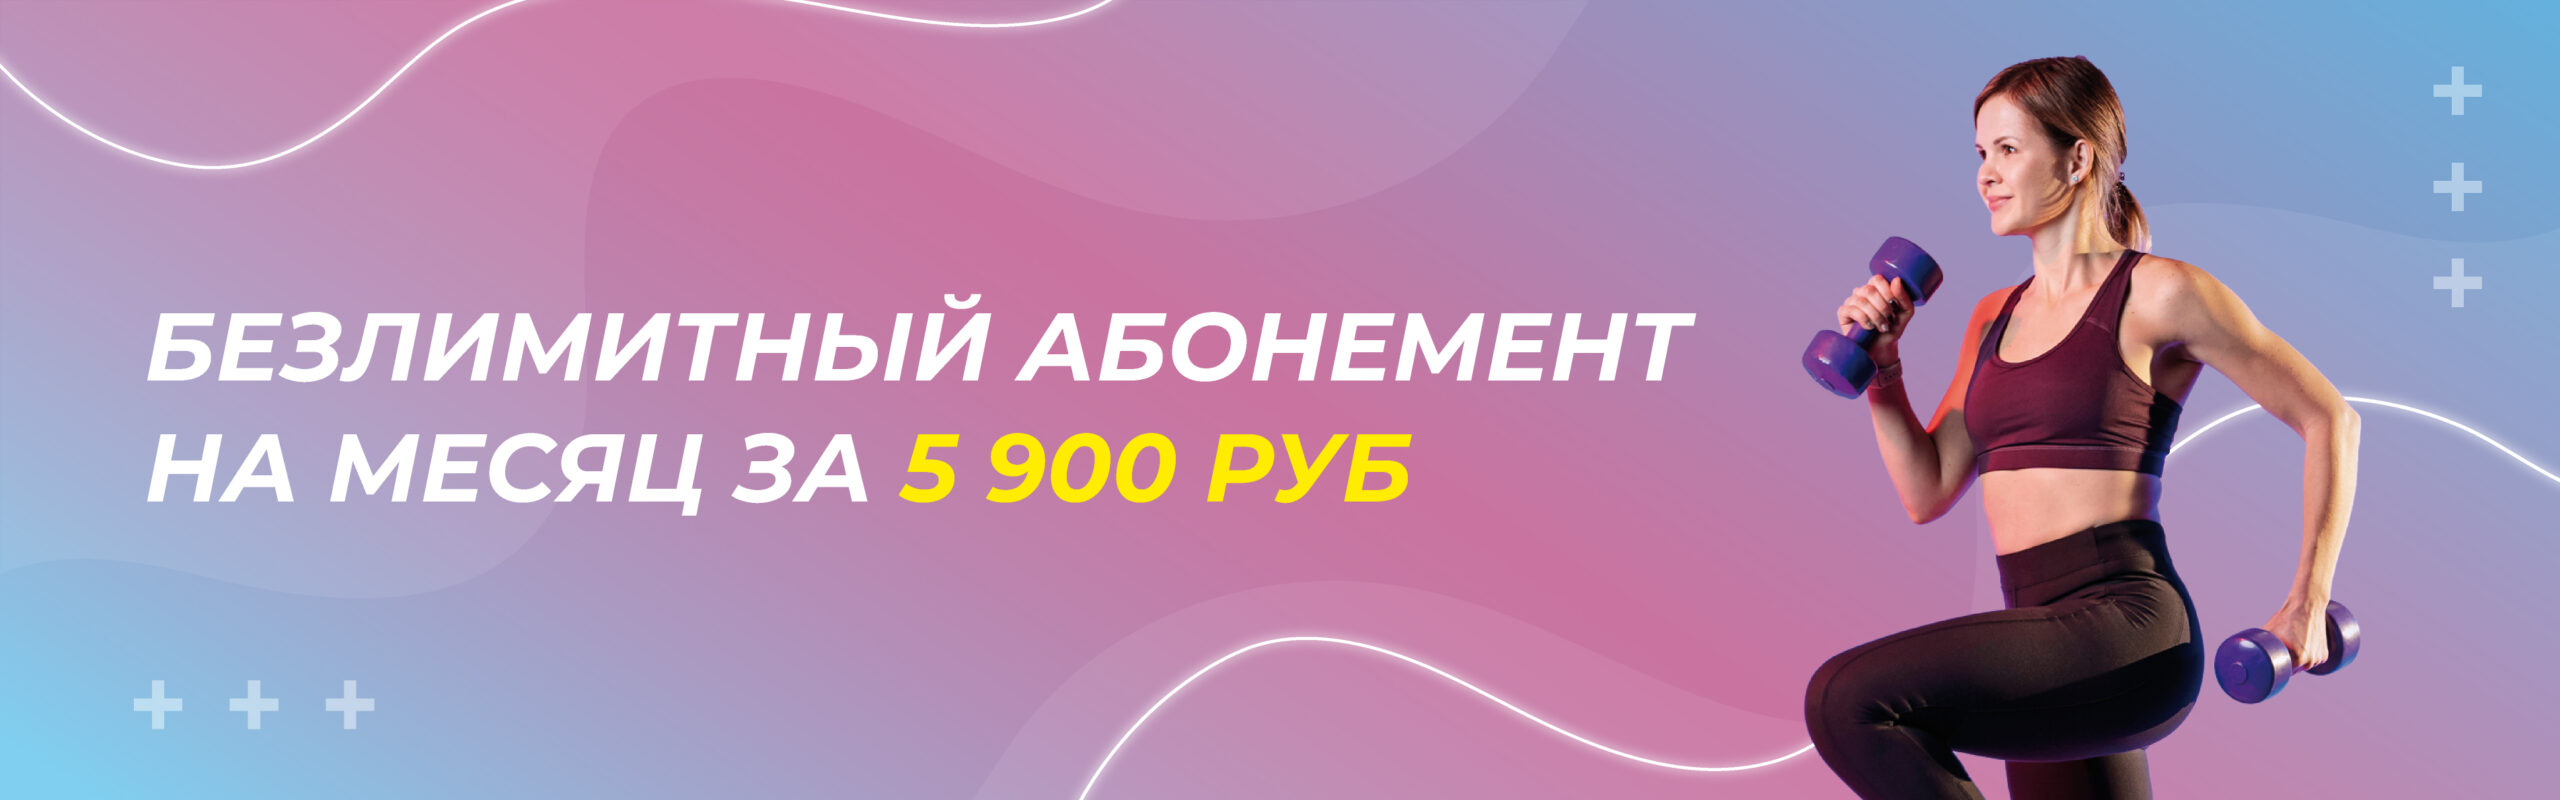 Безлимитный абонемент на месяц за 5900 руб